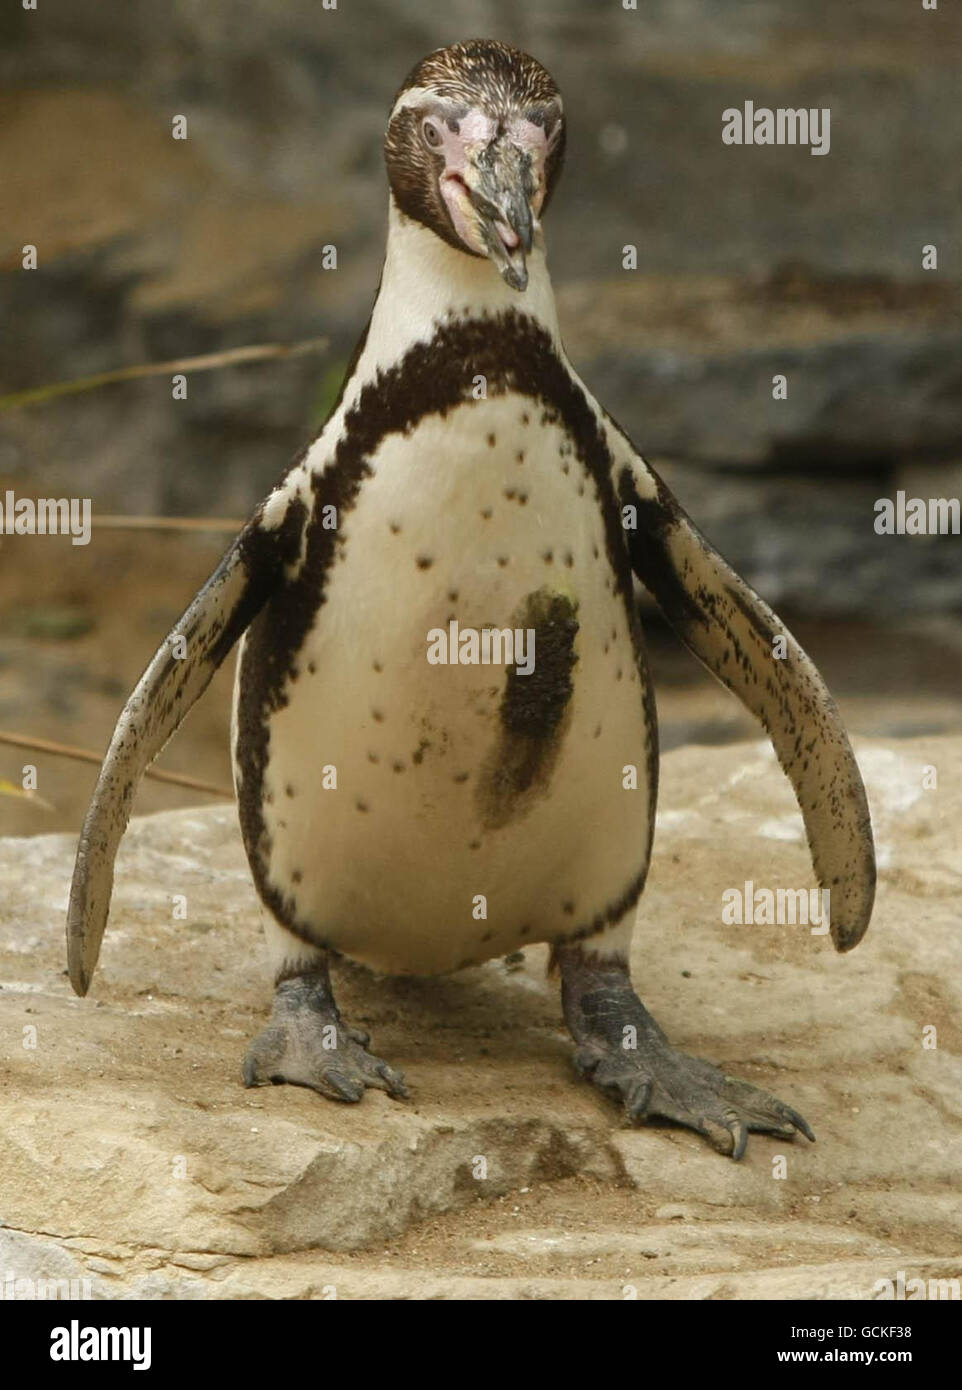 Stolen penguin recovered Stock Photo - Alamy